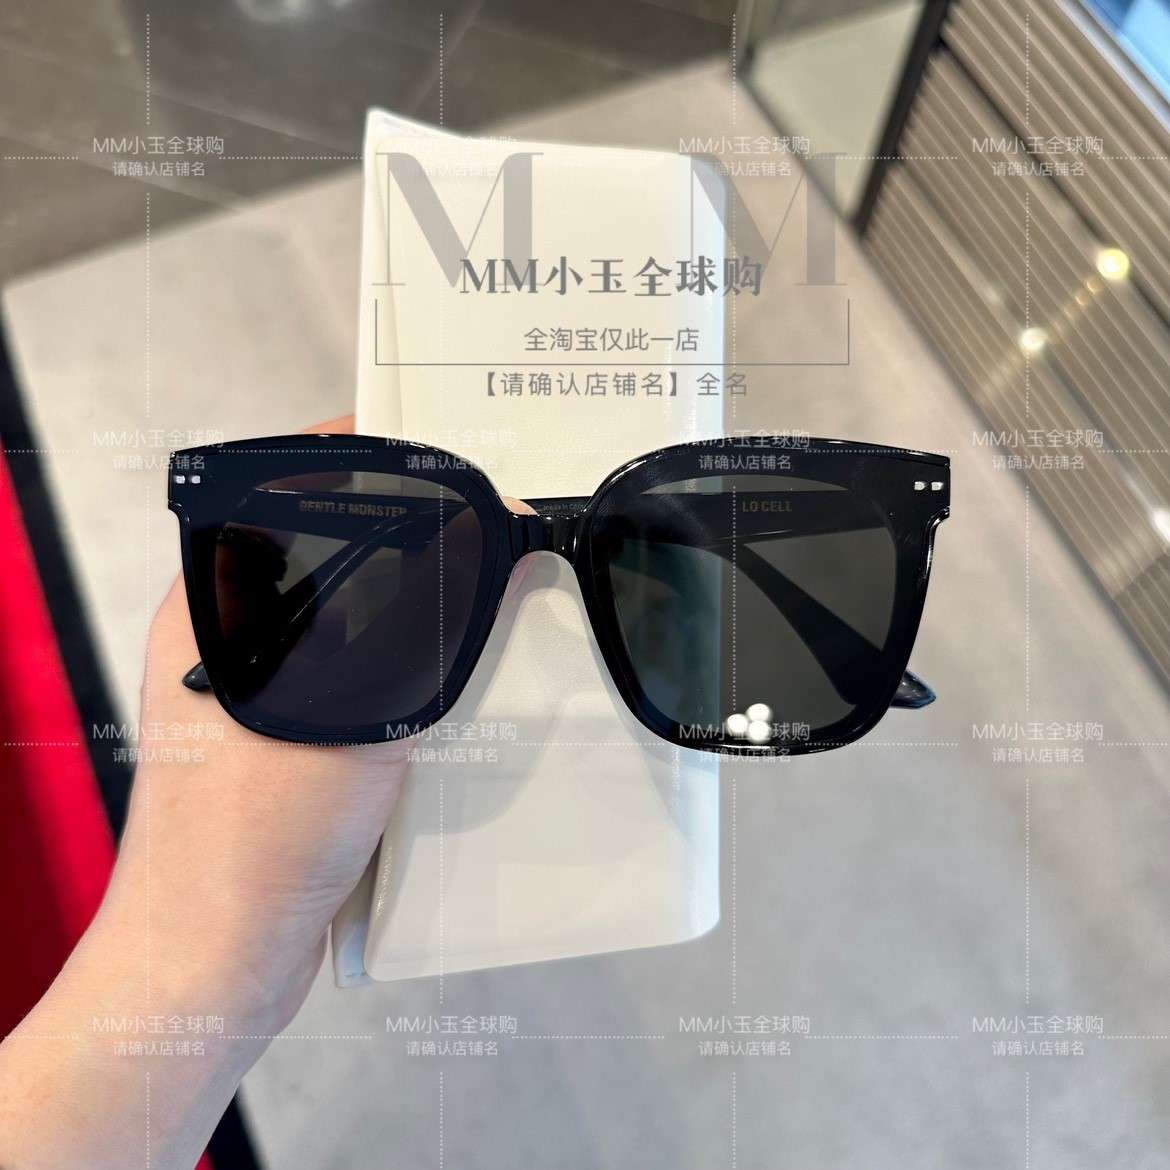 【LOCELL】 GM GENTLE MONSTER墨镜太阳眼镜板材墨镜经典潮流单品